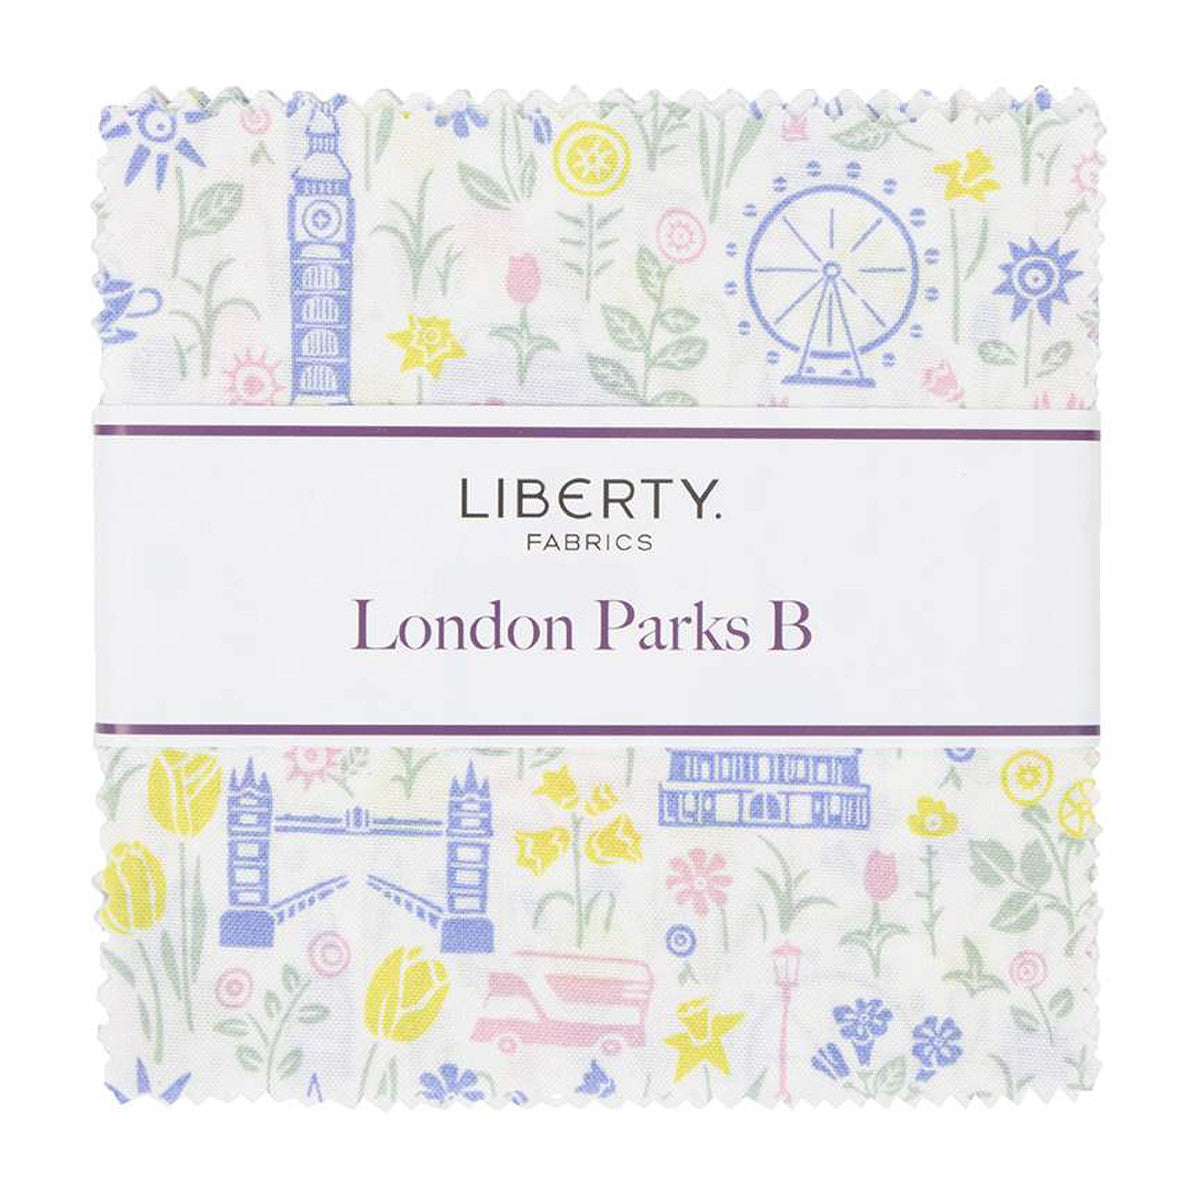 London Parks B by Liberty Fabrics